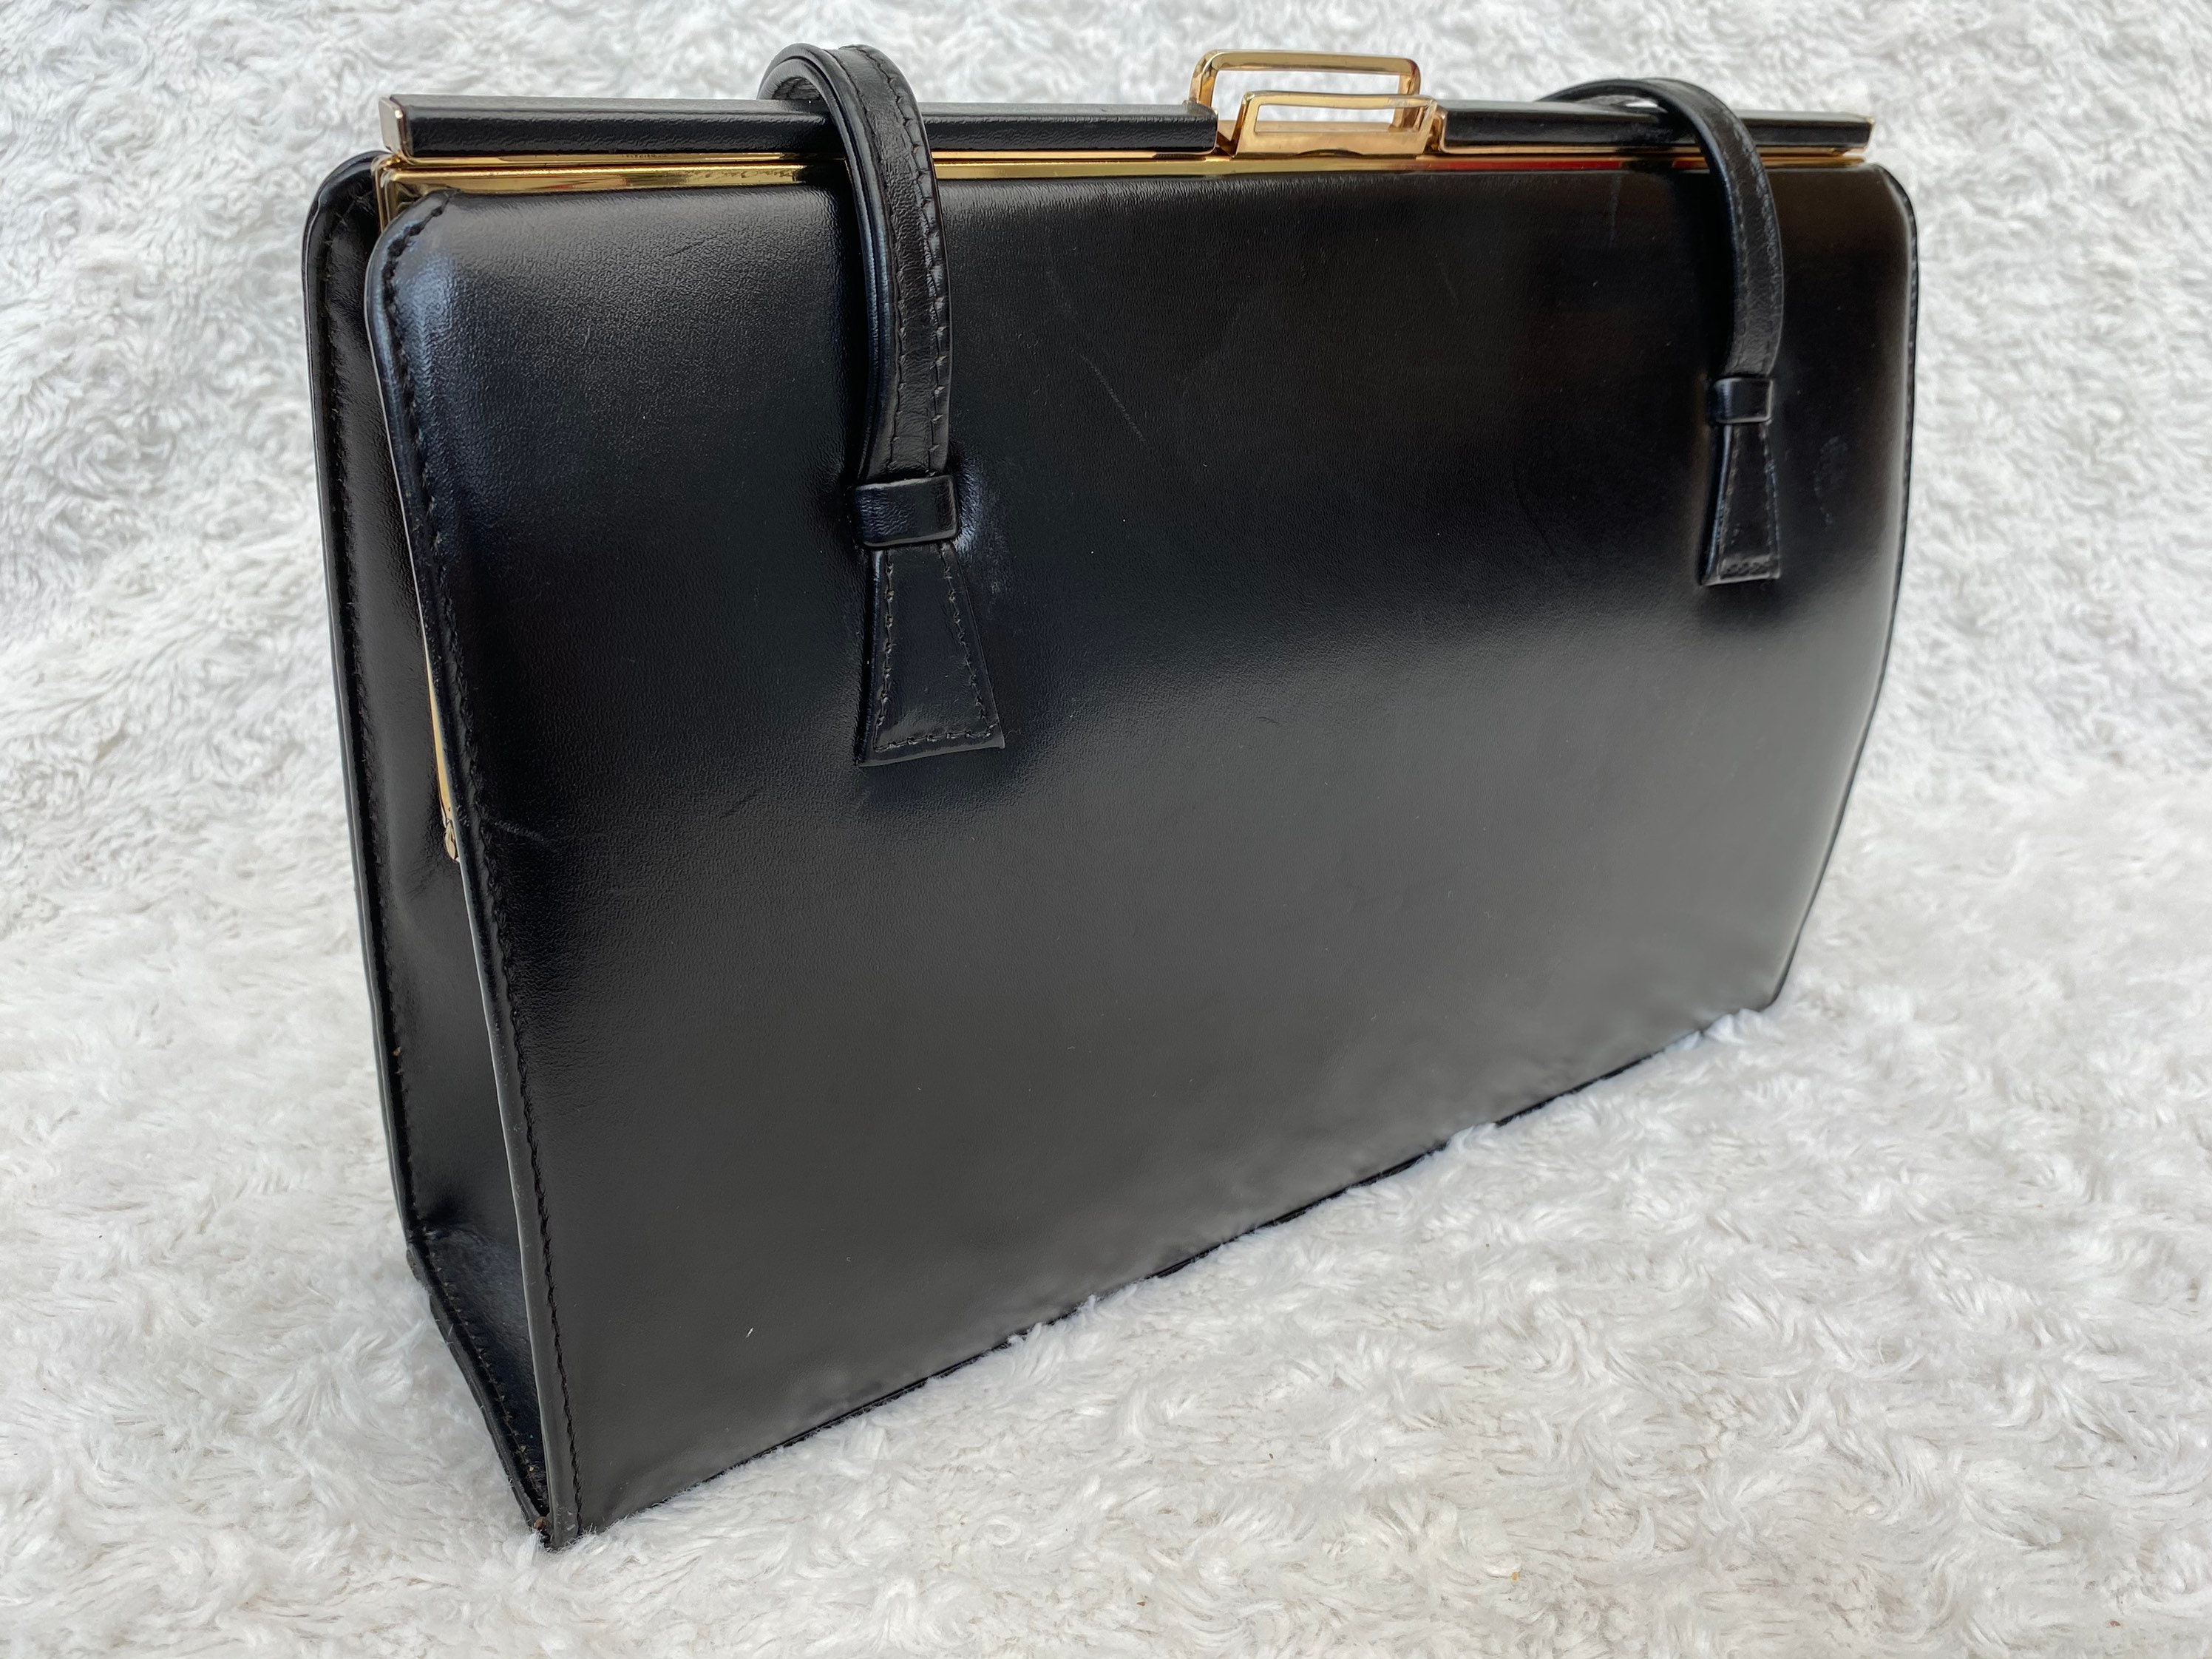 Stunning Ackery vintage black handbag | Etsy